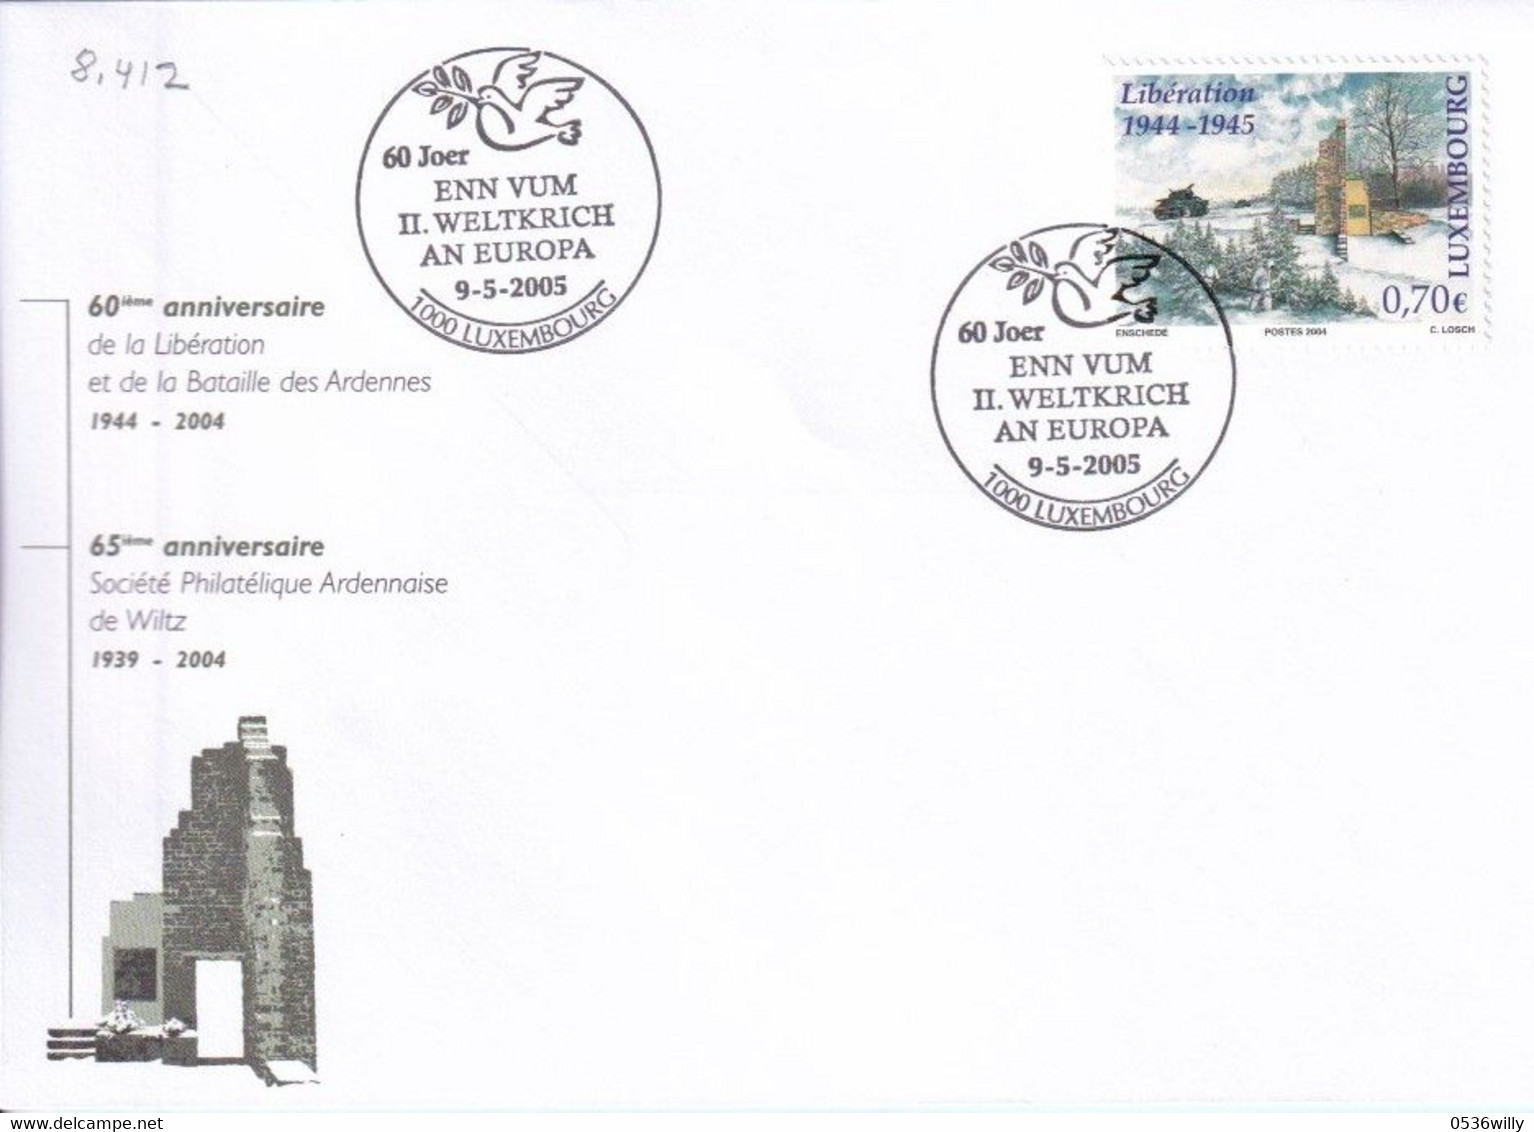 Luxembourg - II. Weltkrich (8.412) - Storia Postale